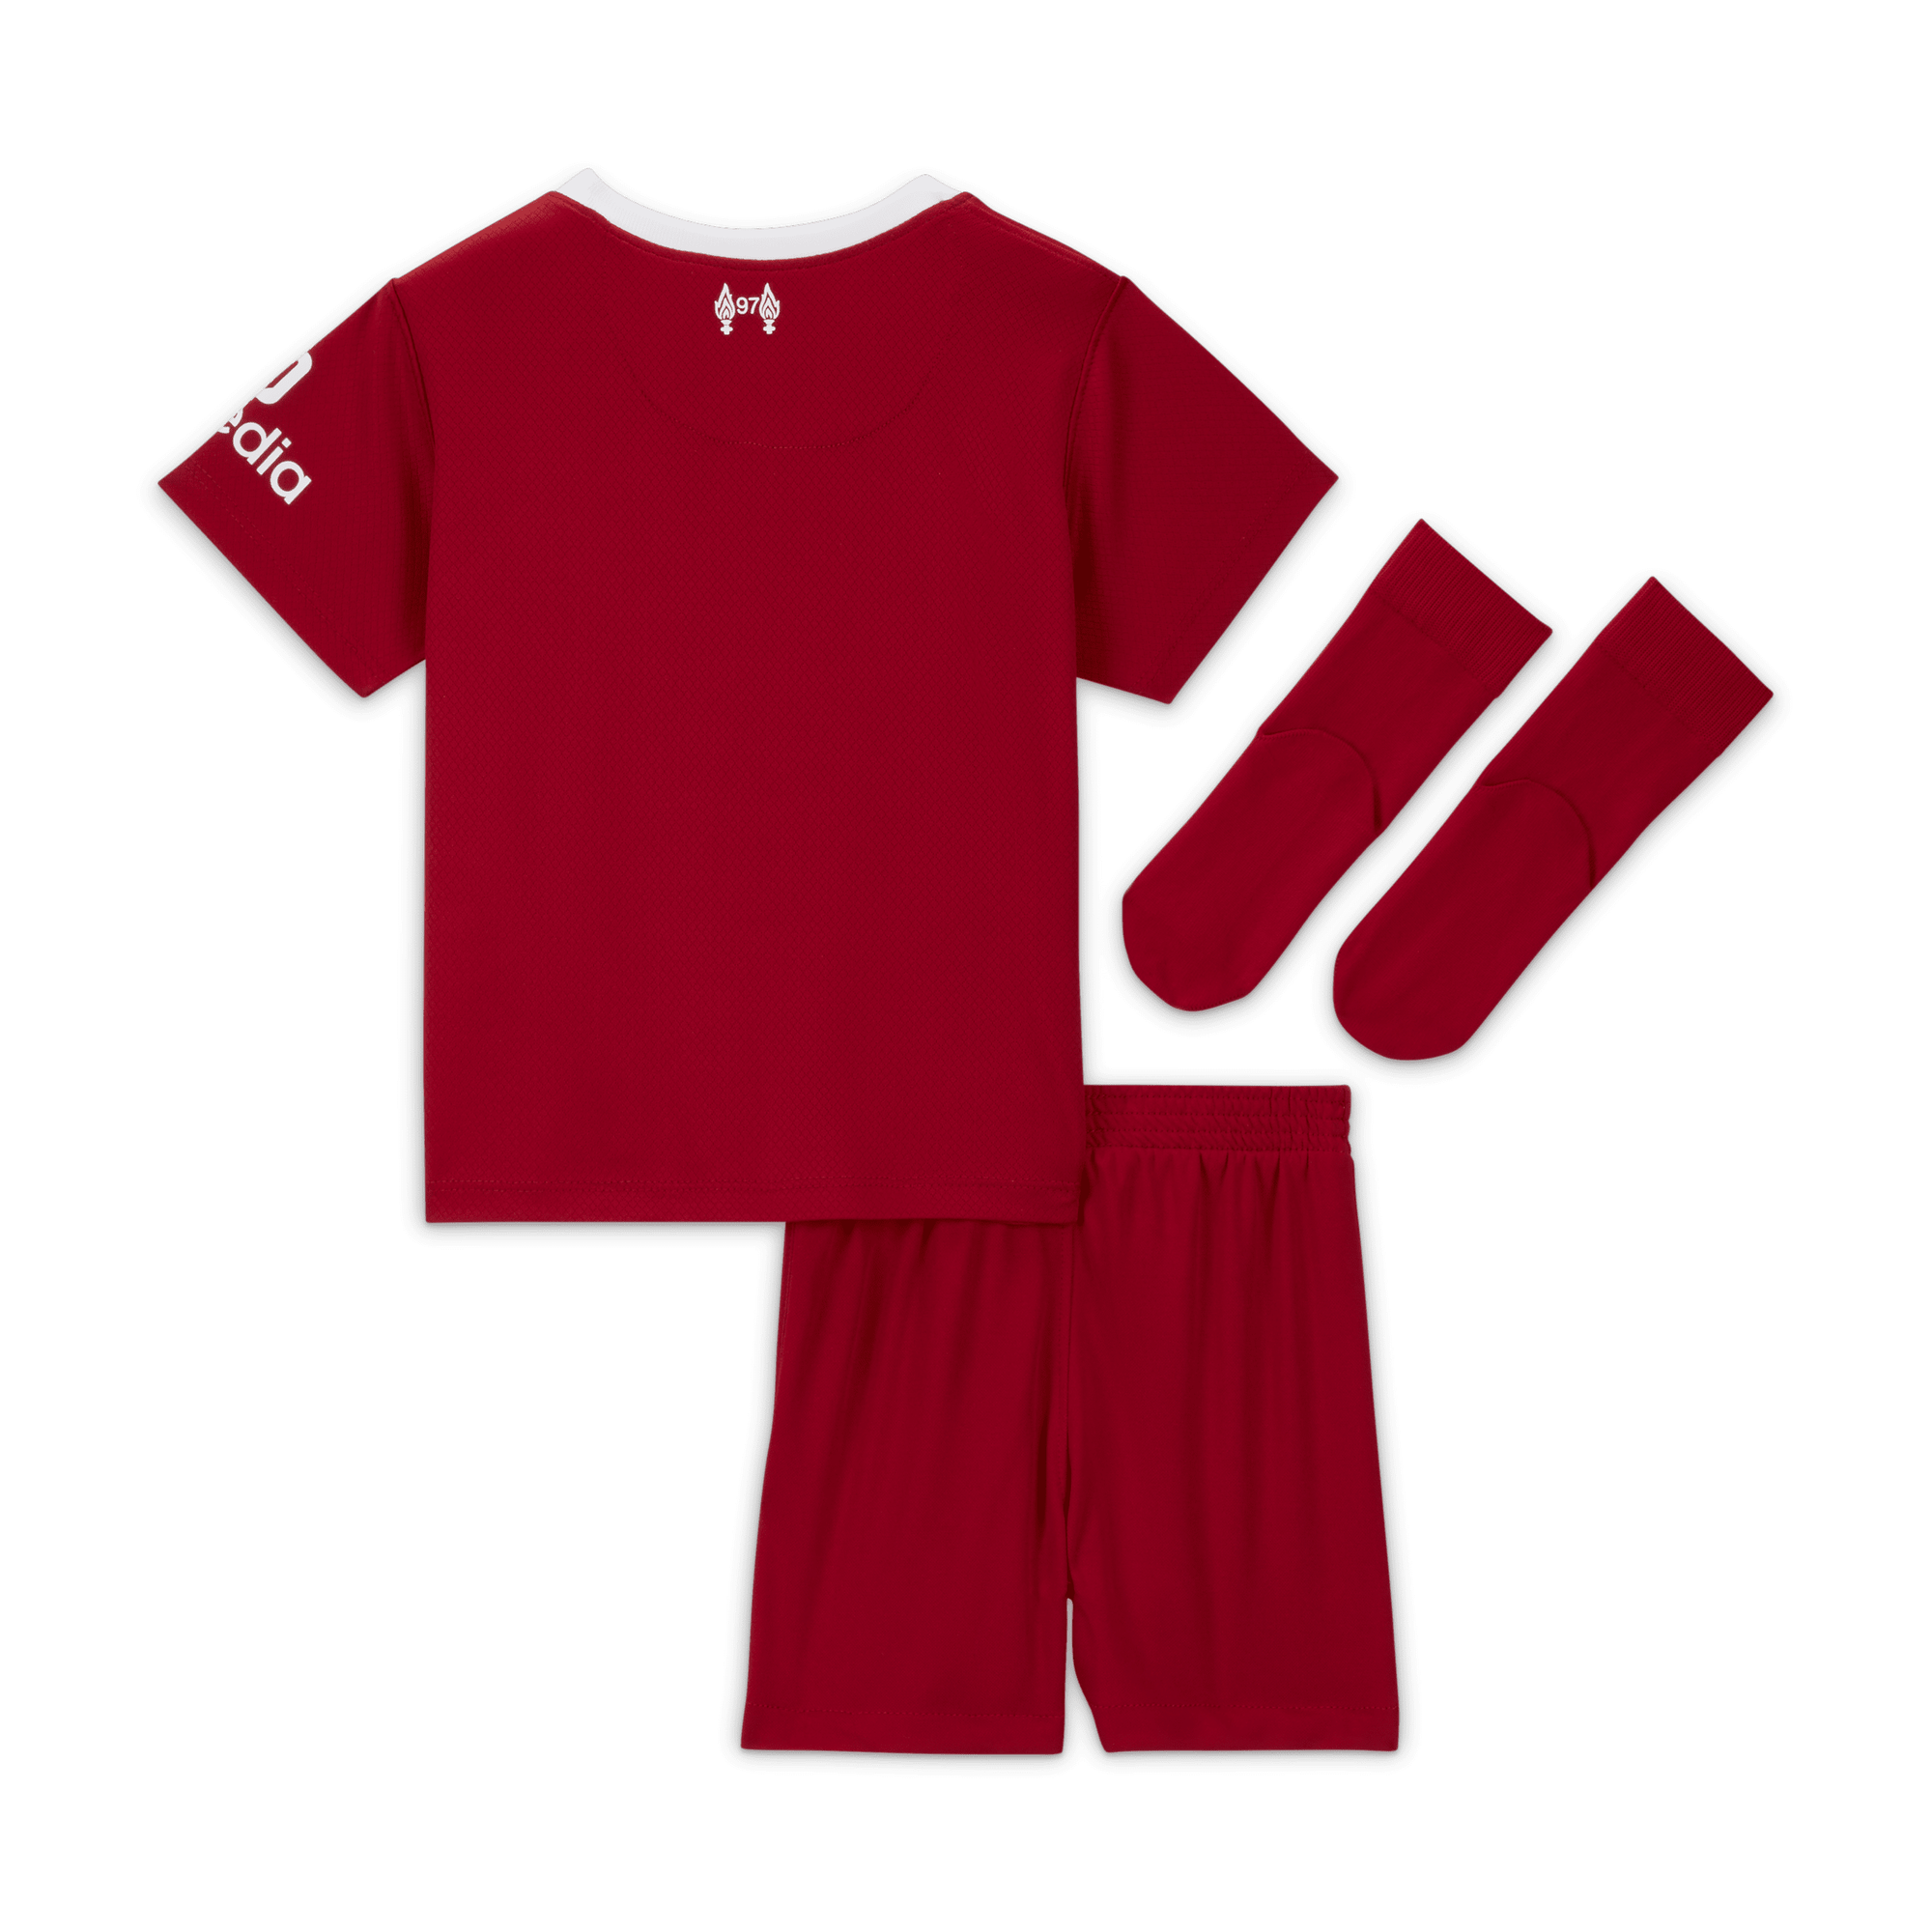 Infants Liverpool FC Home Kit